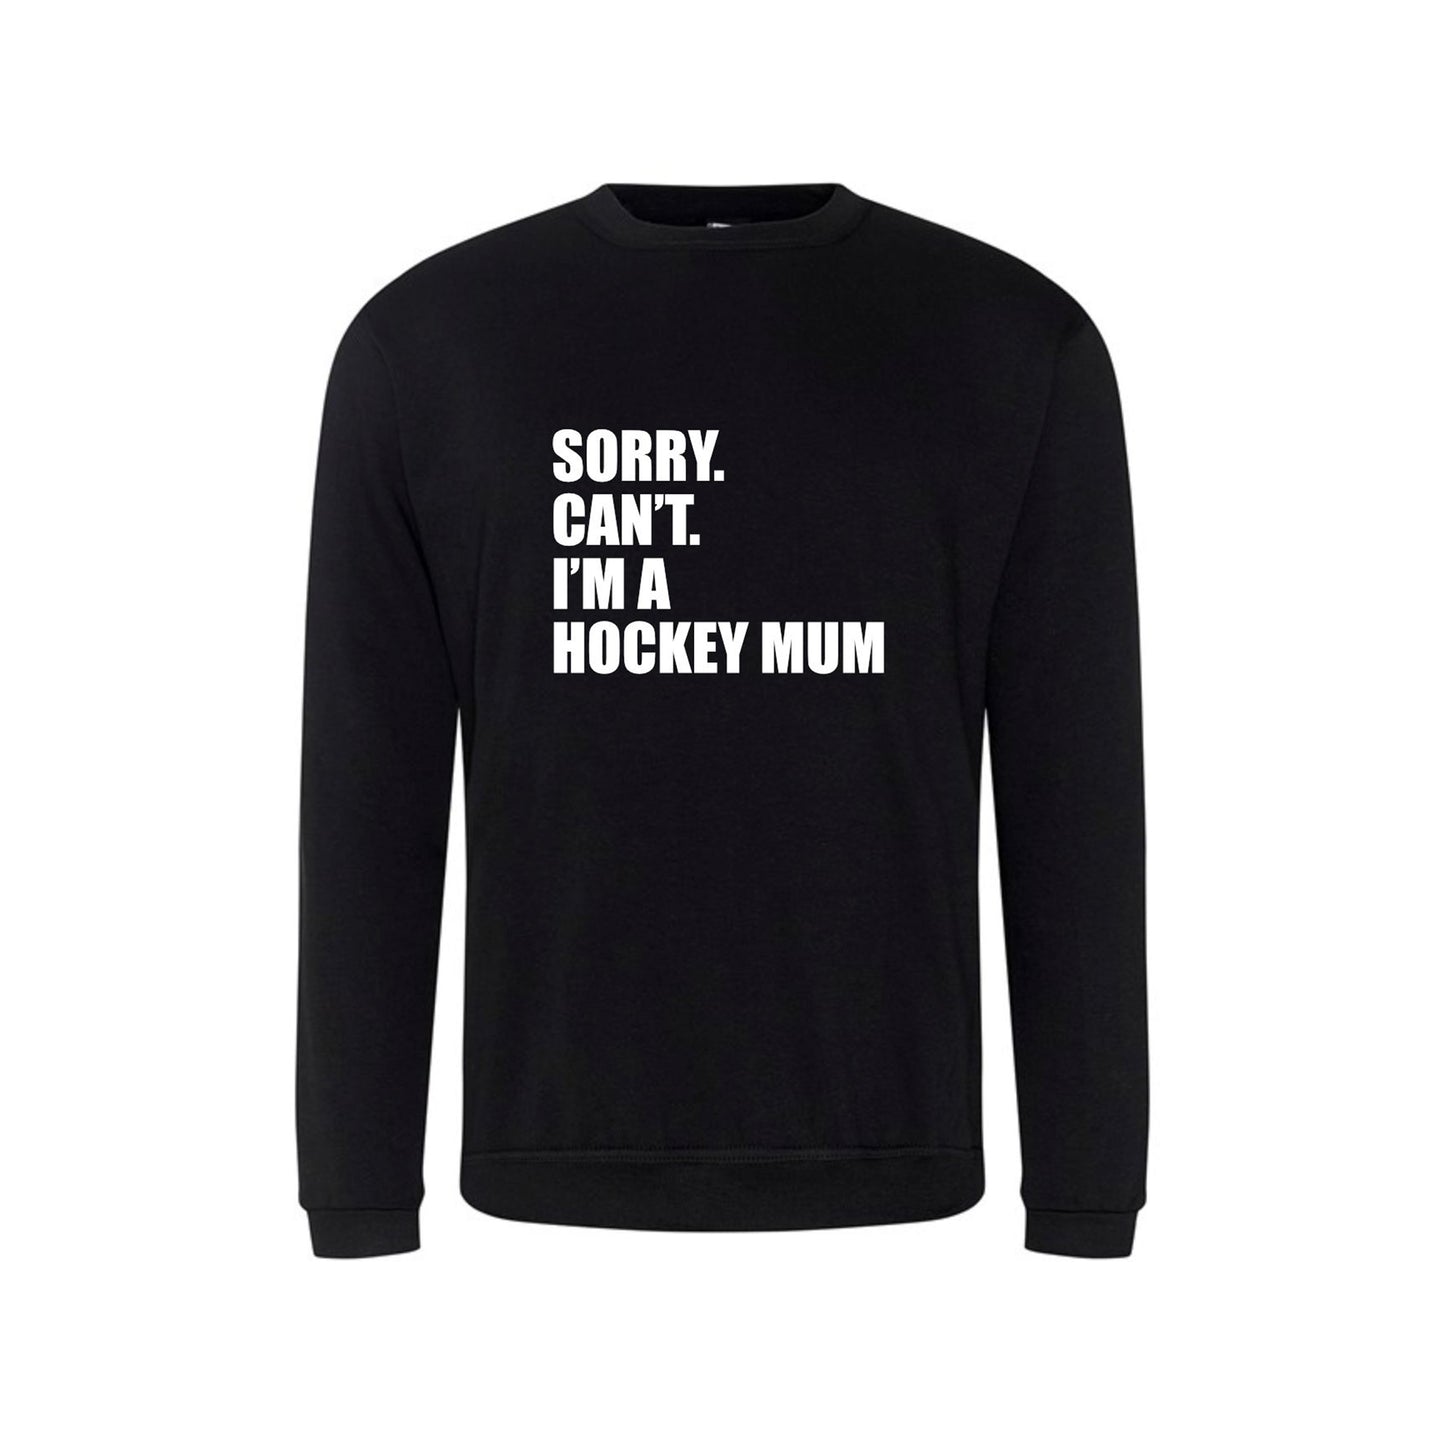 Sorry. Can't. I'm A Hockey Mum. Sweatshirt